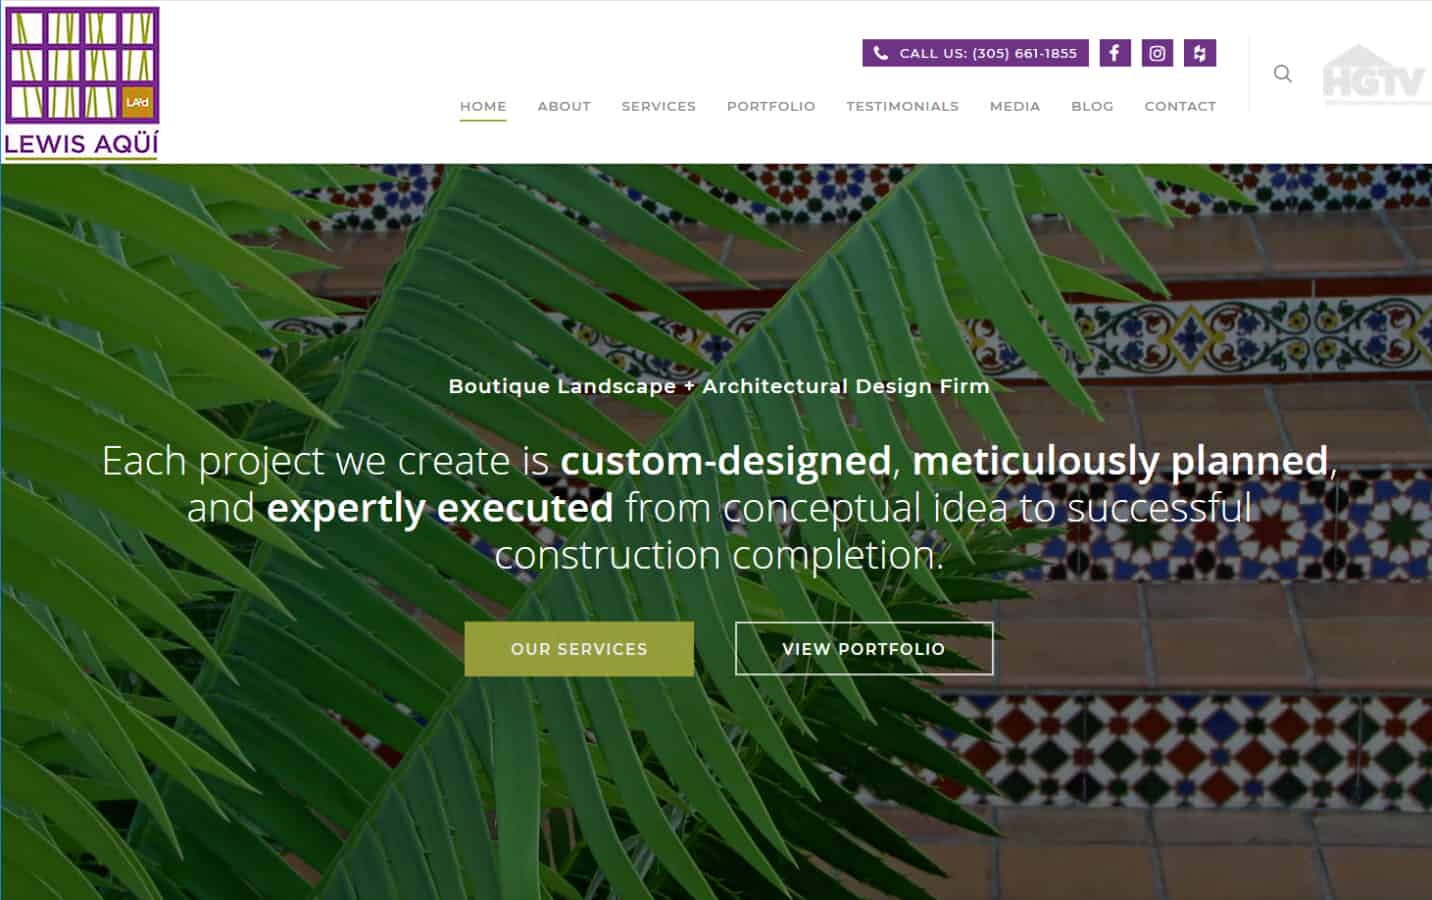 Lewis Aqui Miami Landscape Architecture Website by iSatisfy.com